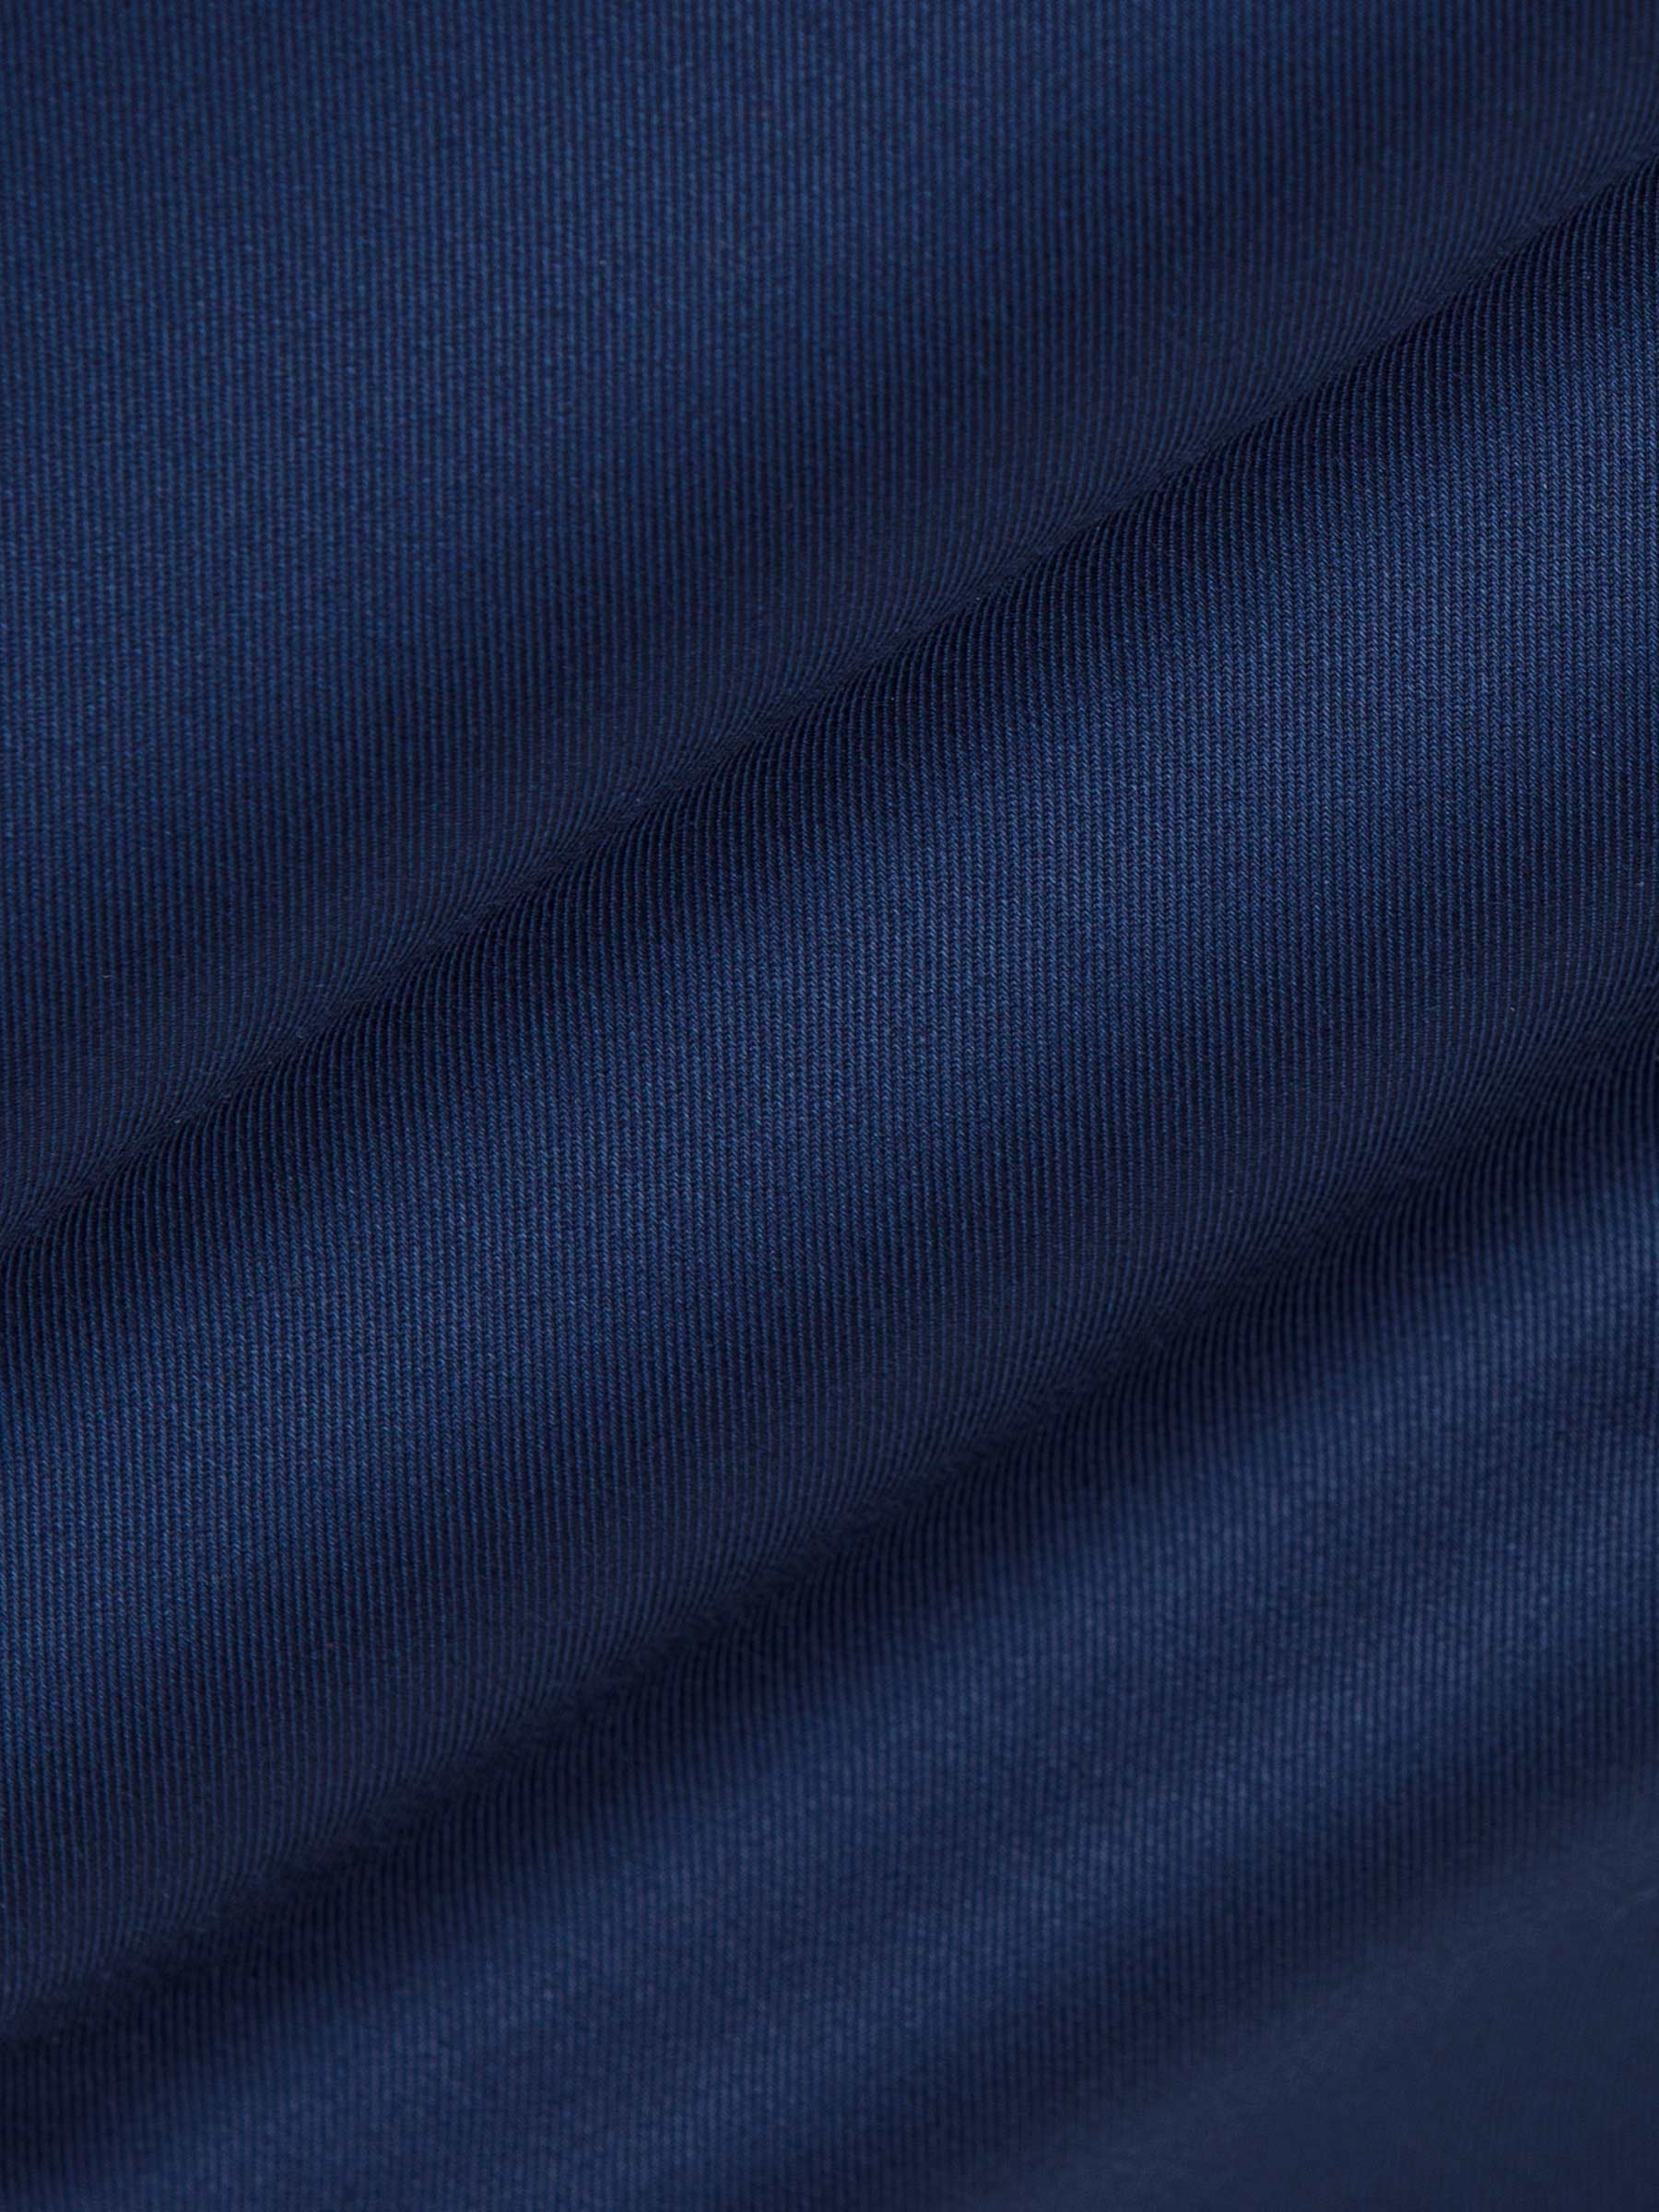 Vercelli Solid Navy Shirt Long Sleeve 